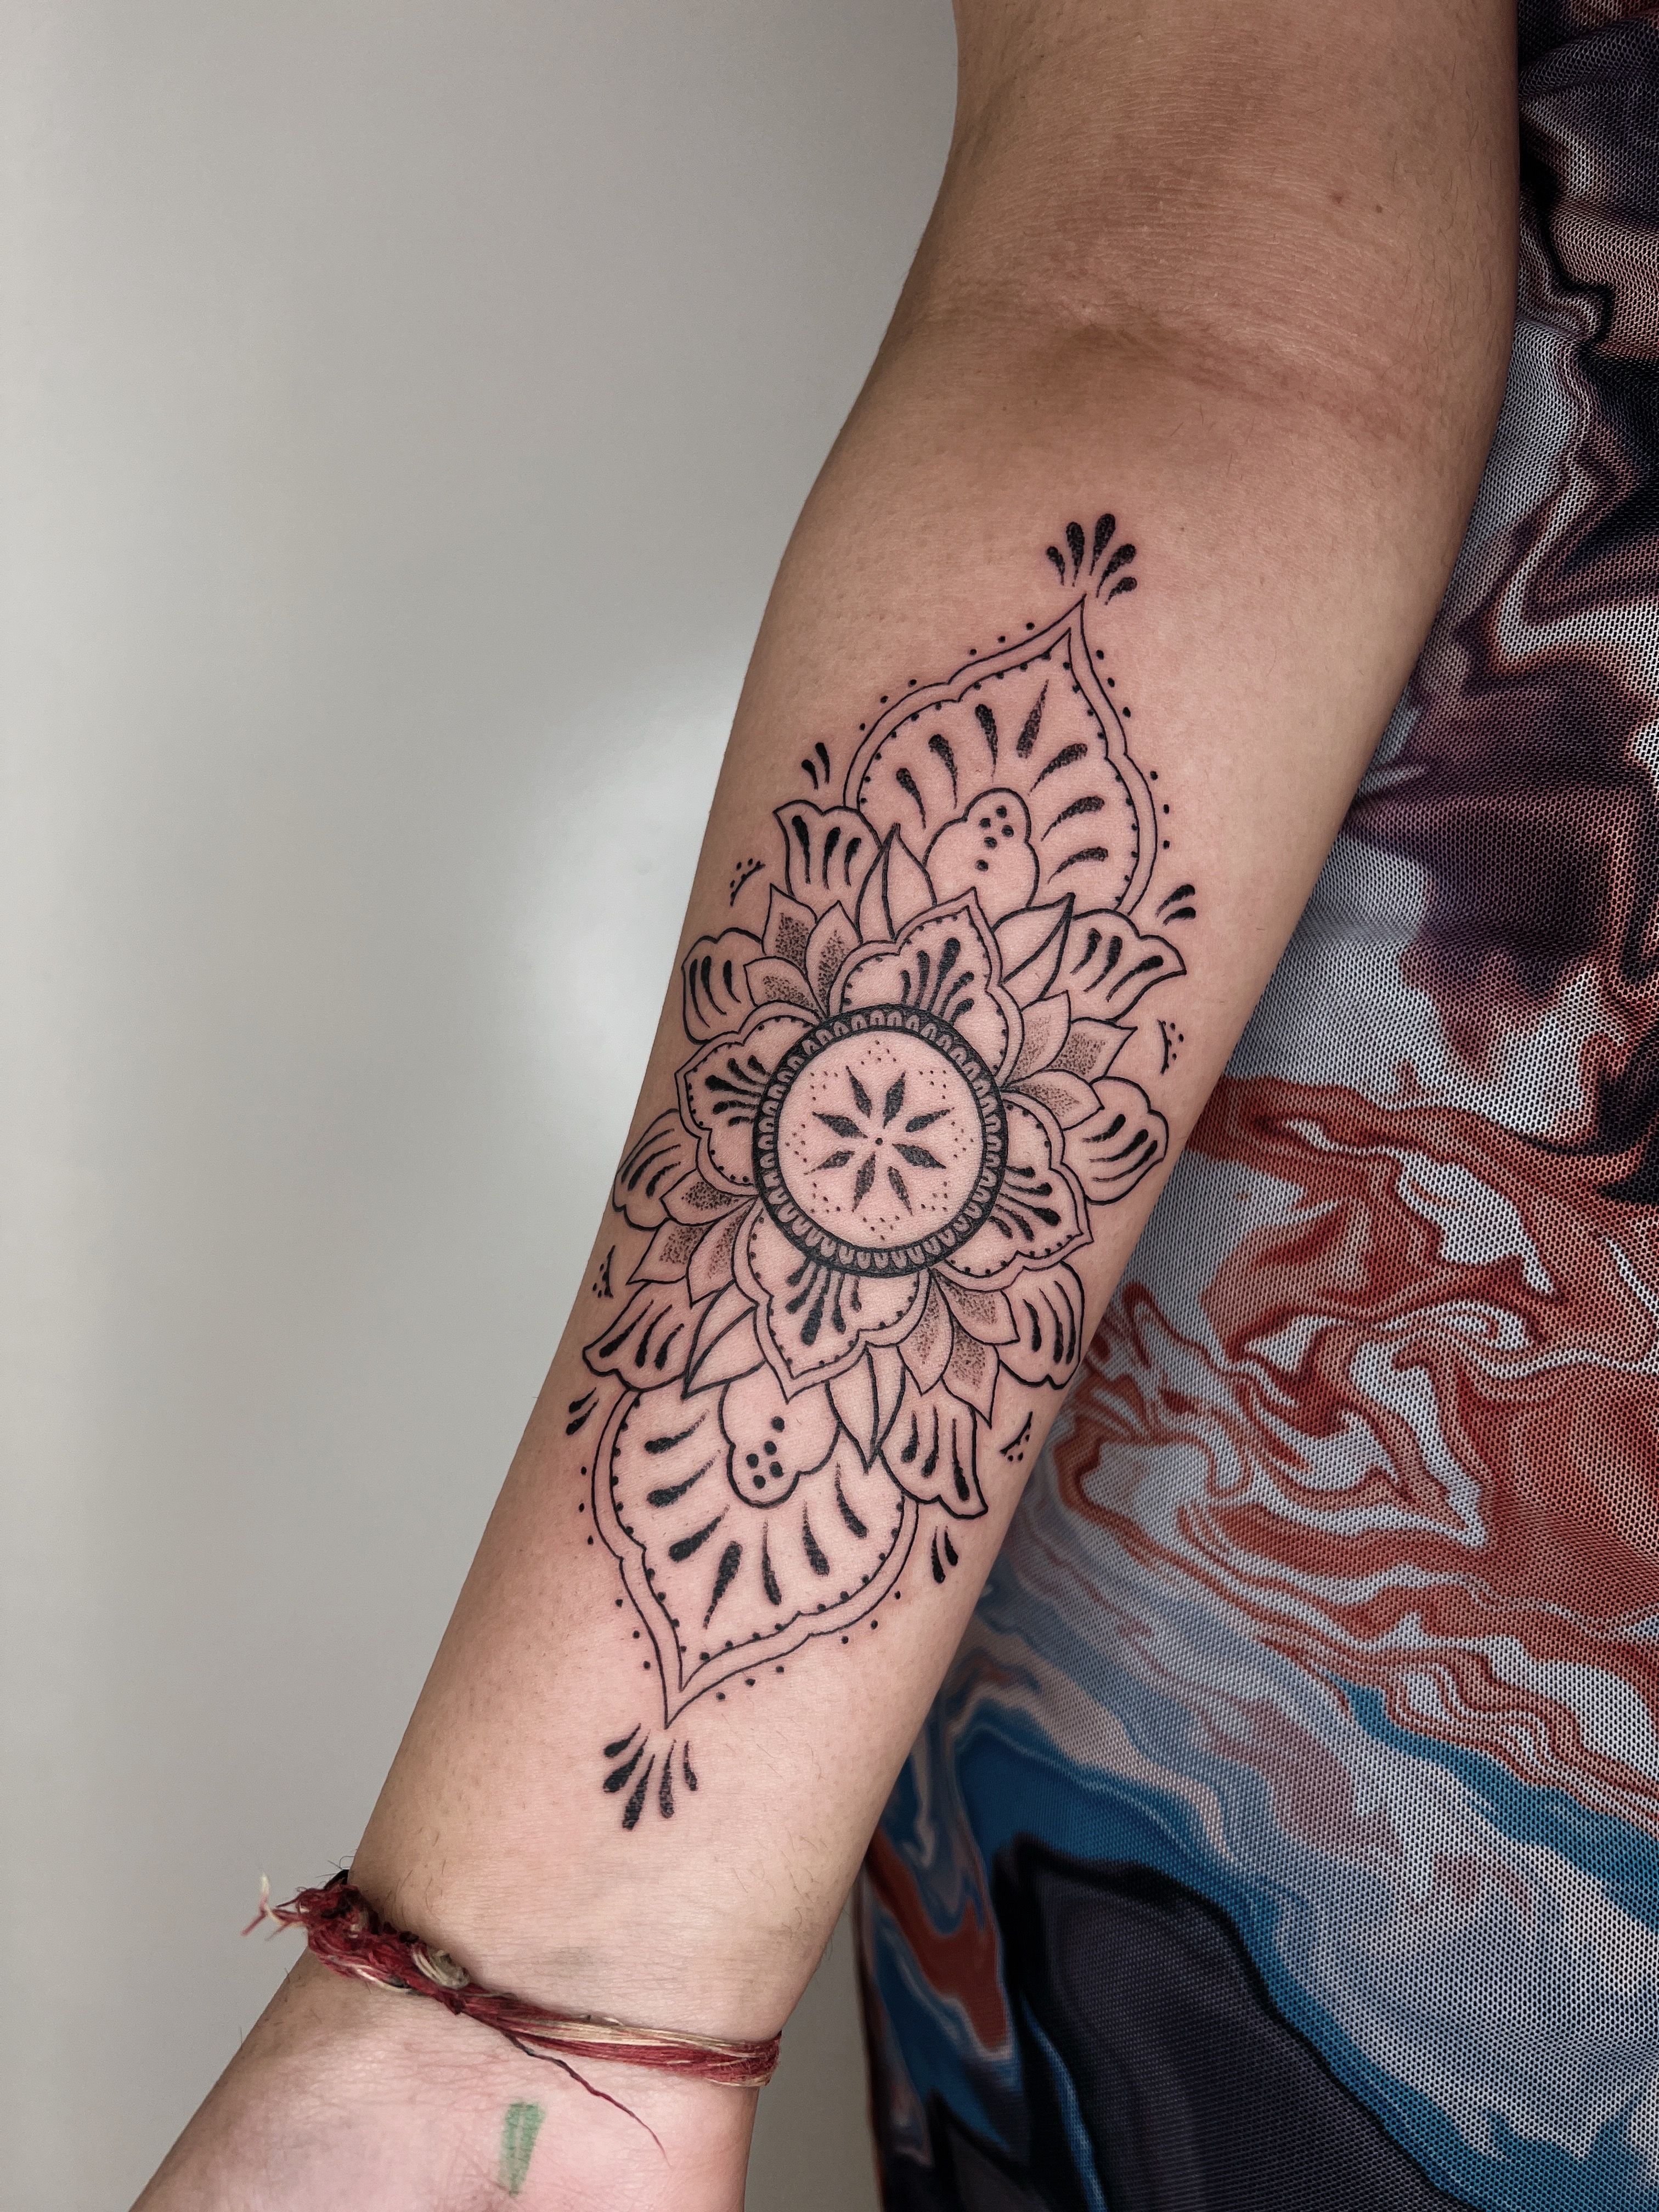 Henna tattoo on forearm stock photo. Image of religion - 121752192